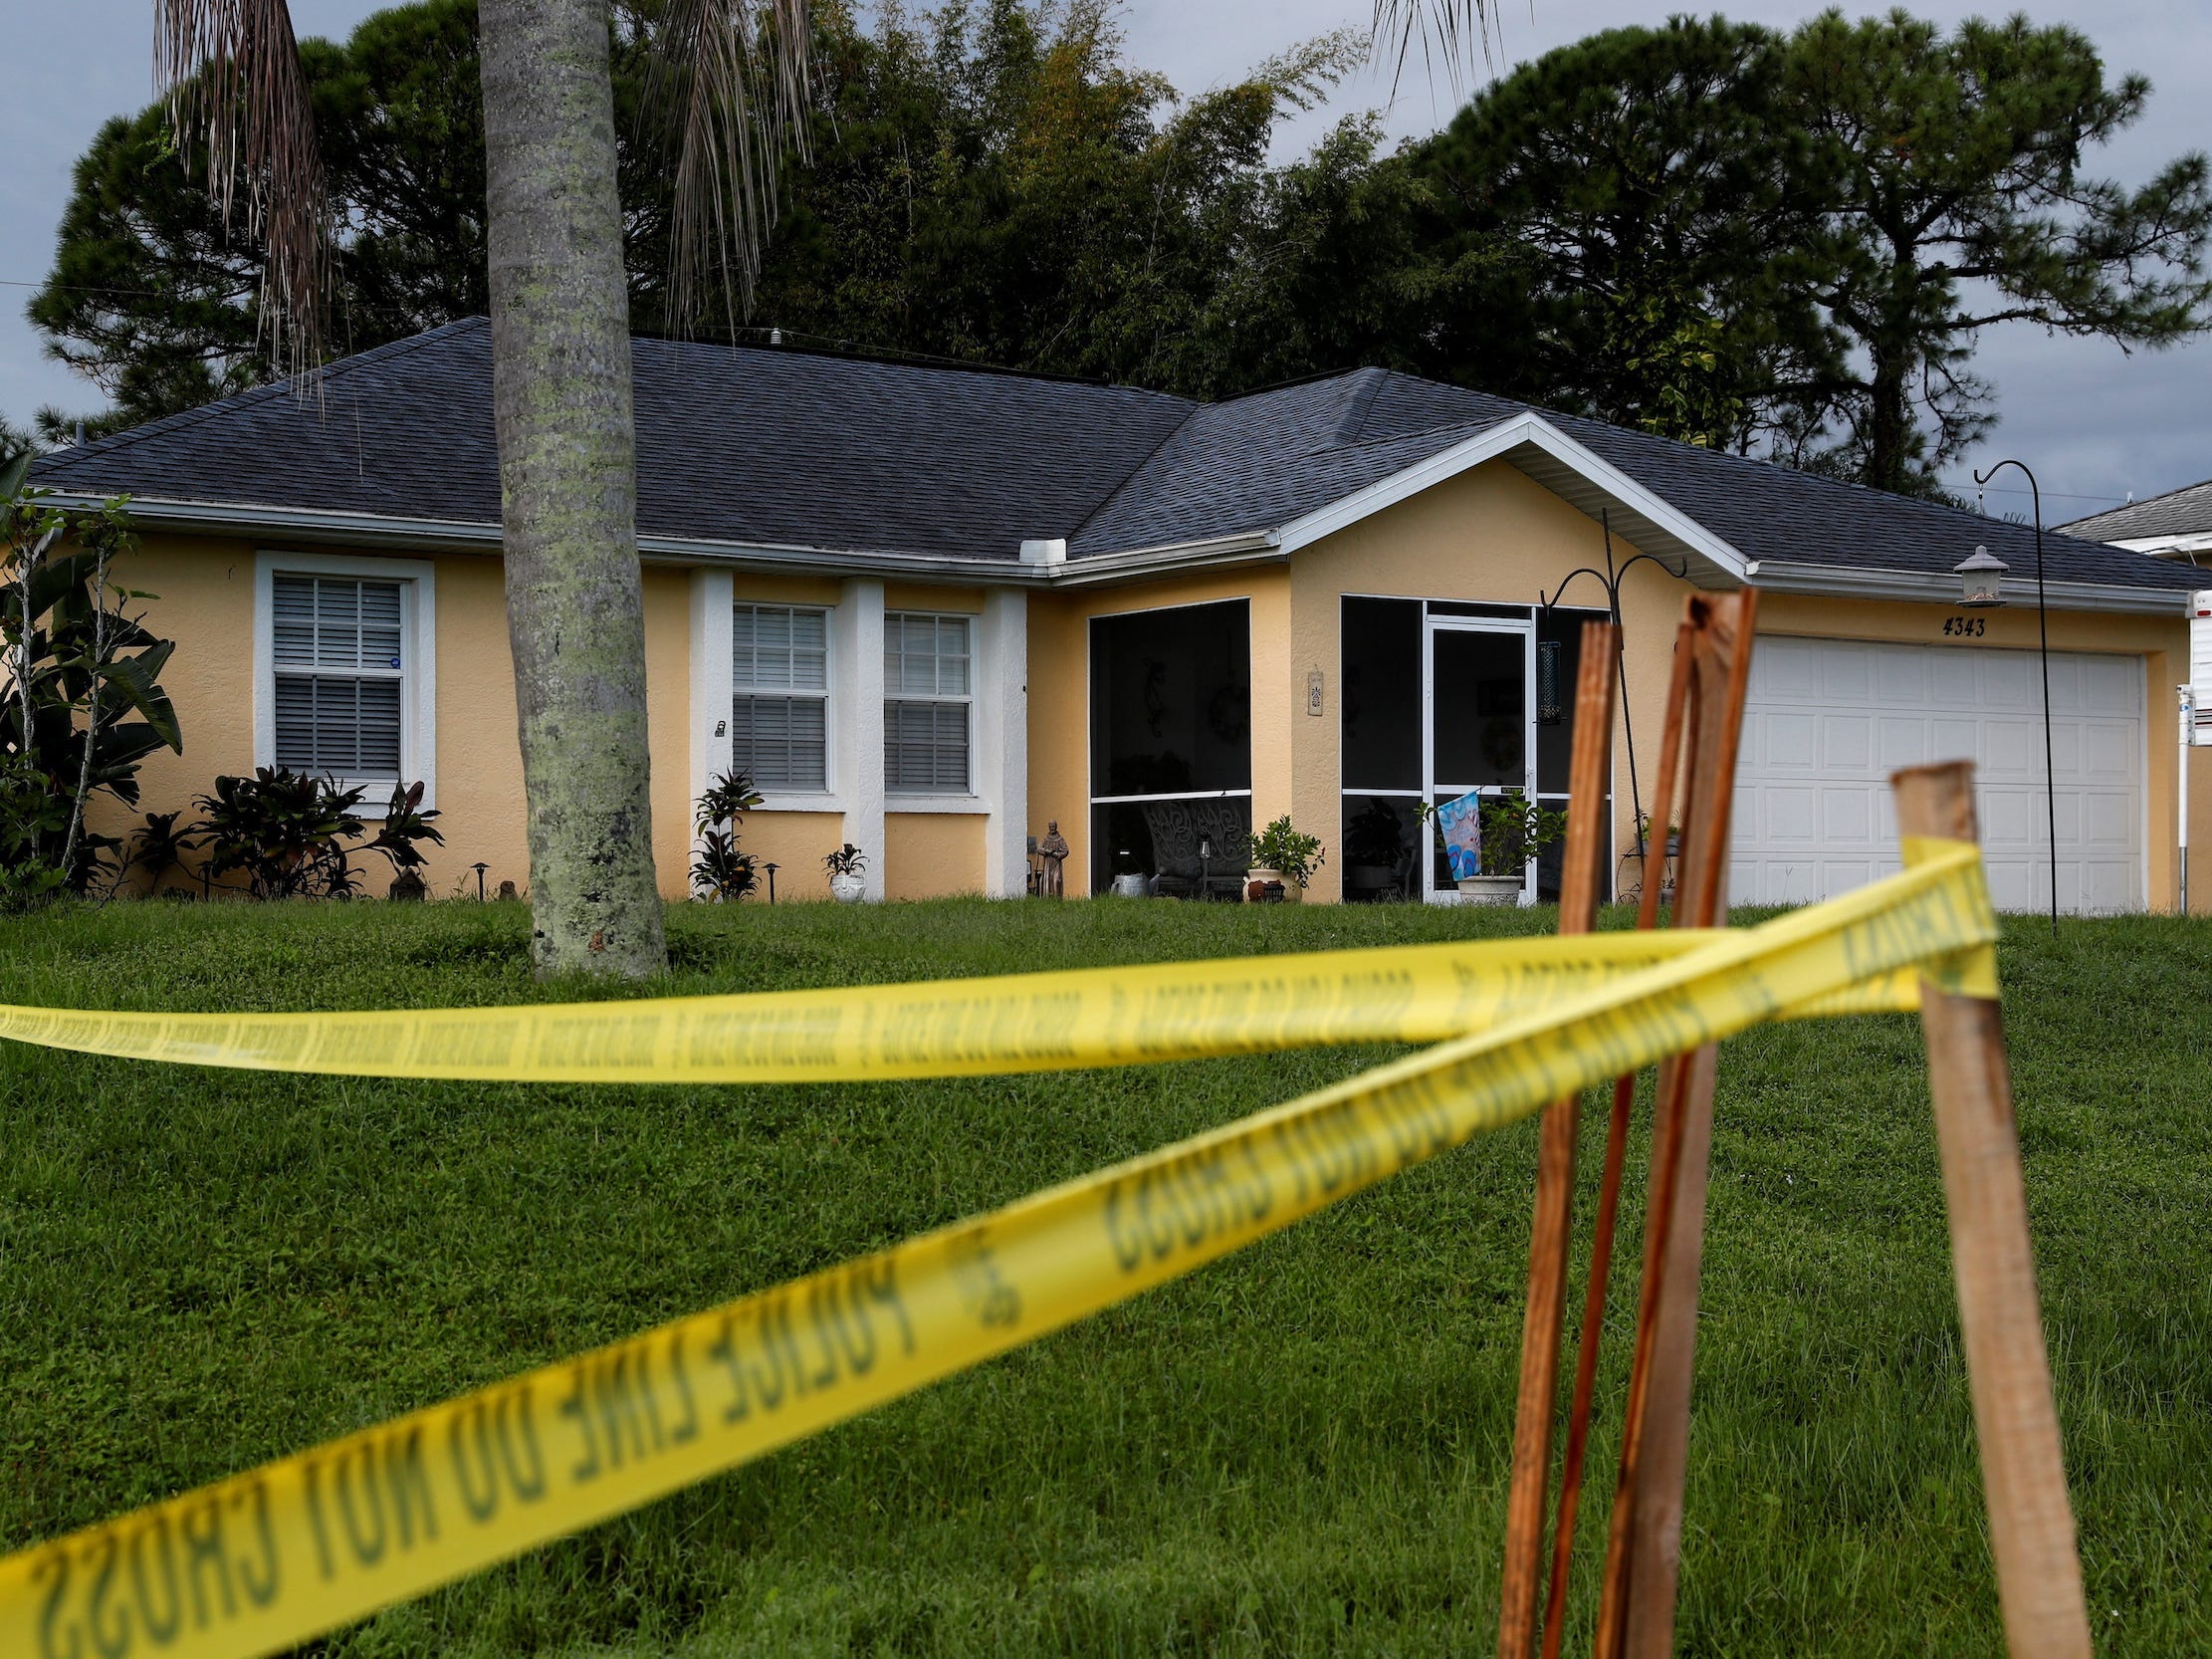 Brian Laundrie's (gabby petito's boyfriend) parent's house with crime scene tape